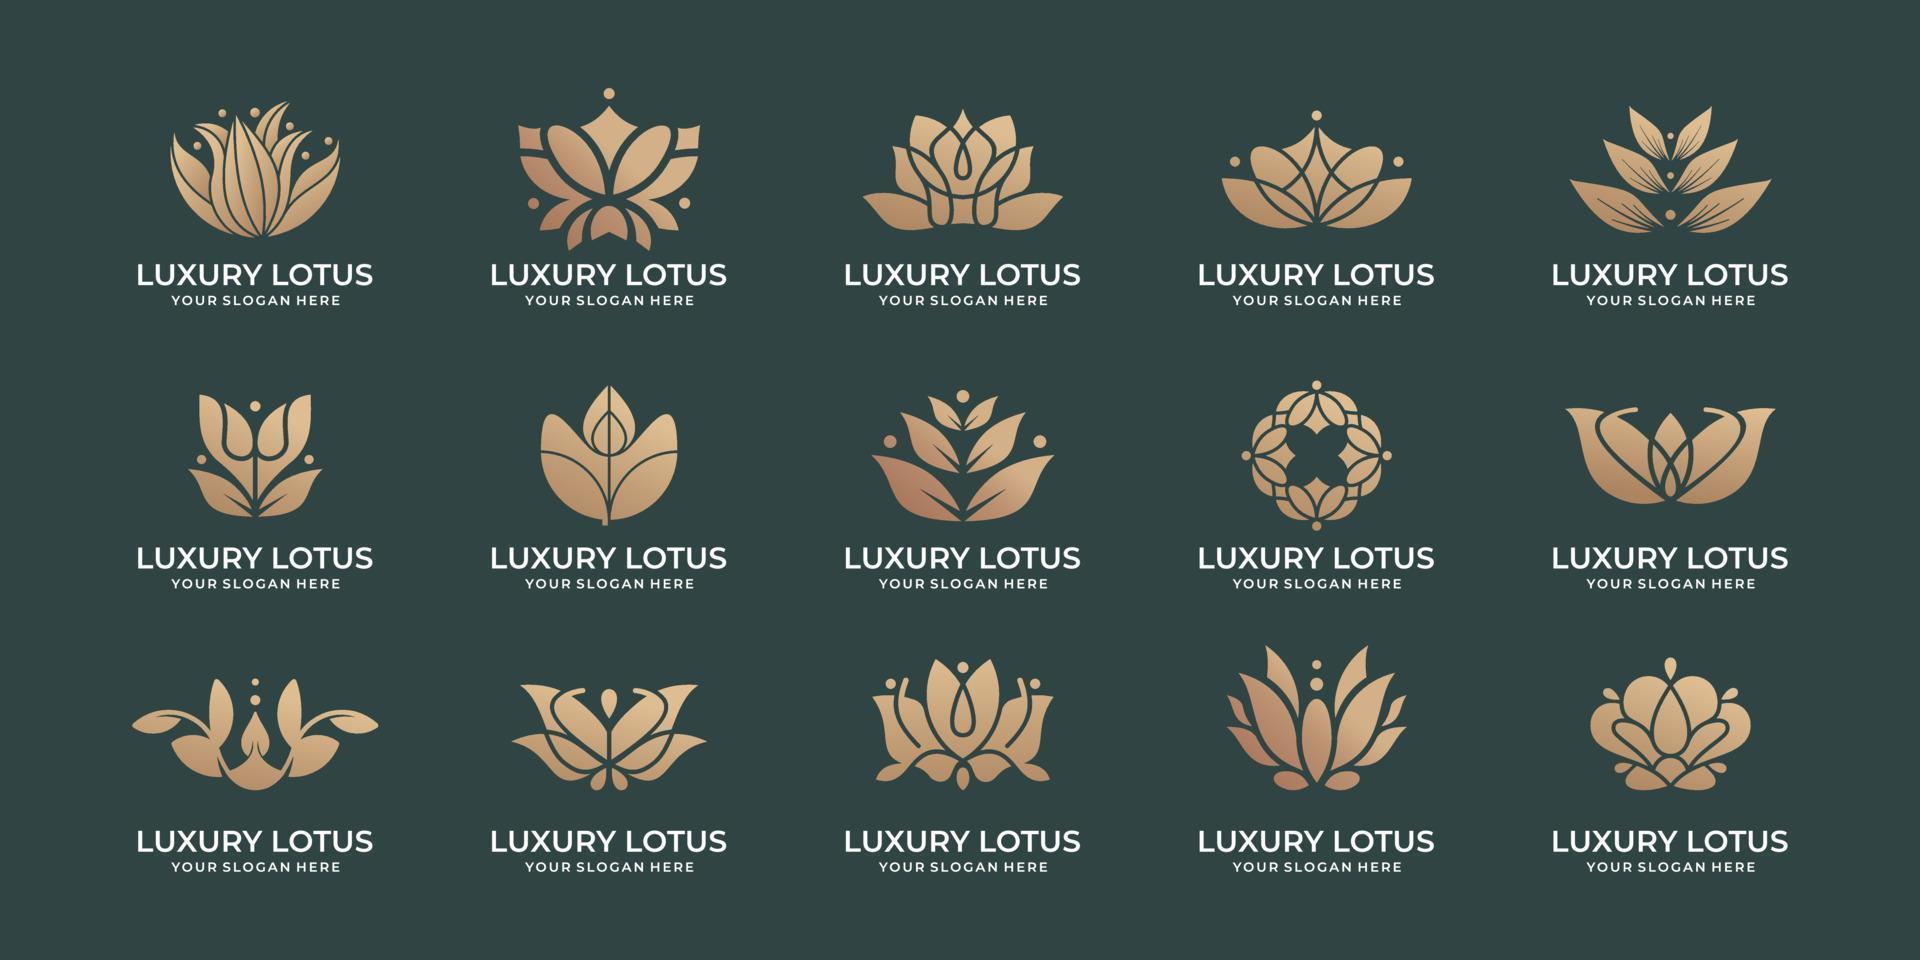 luxury lotus logo design bundle inspiration.lotus flower,floral ornament logo,icon set,lotus logo. vector